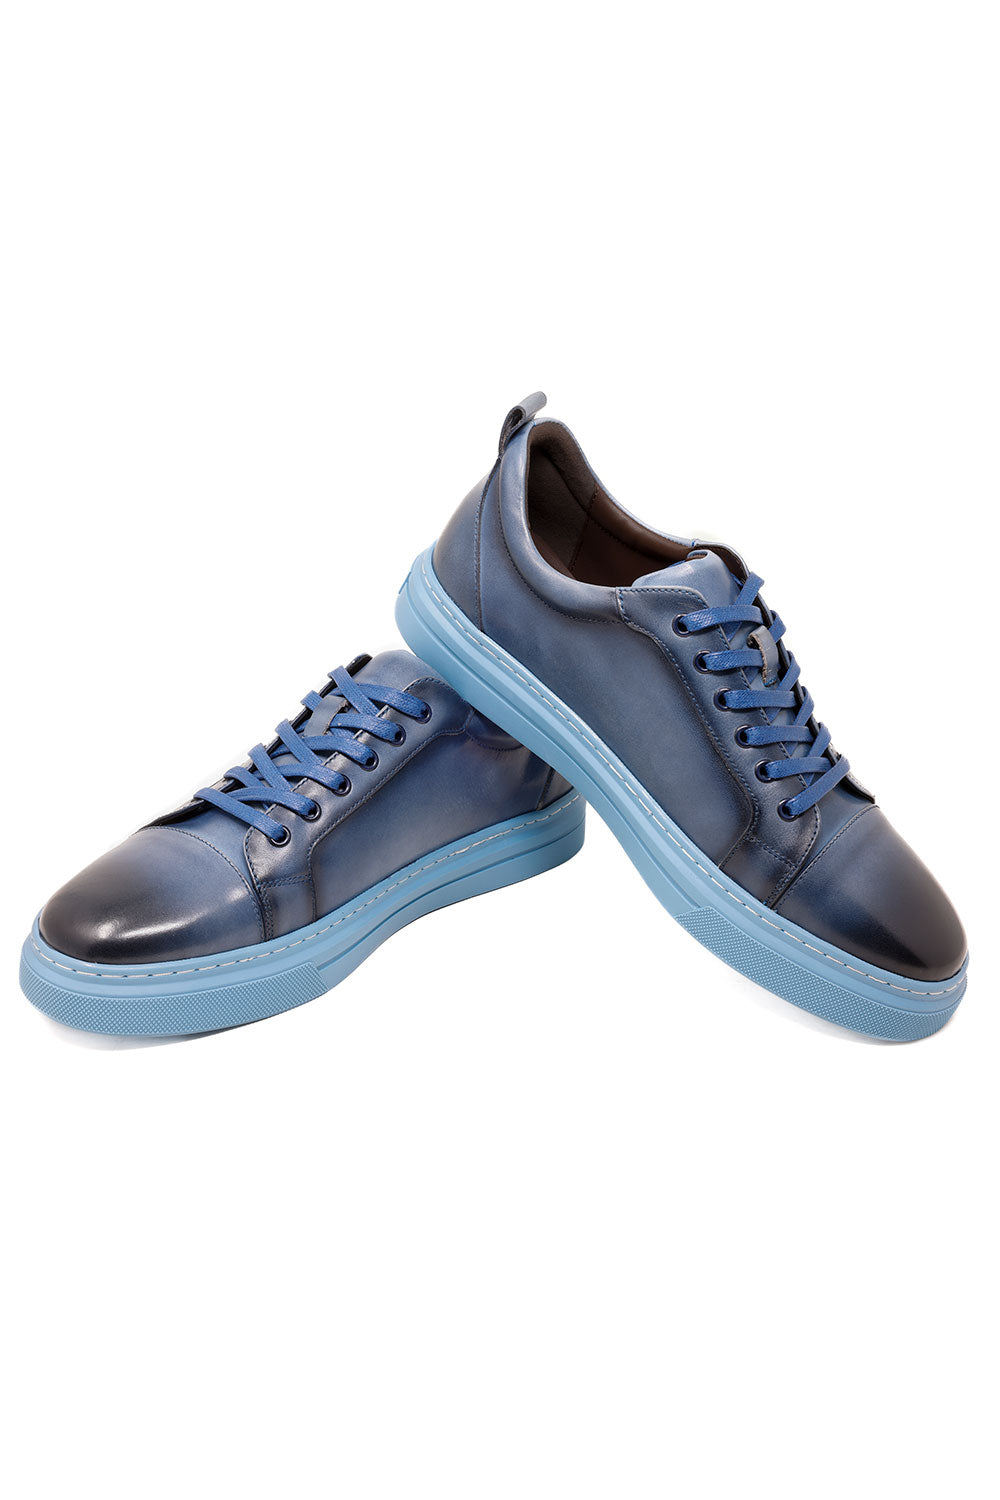 Barabas Men's Premium Leather Low Top Casual Sneaker 3SH21 Blue